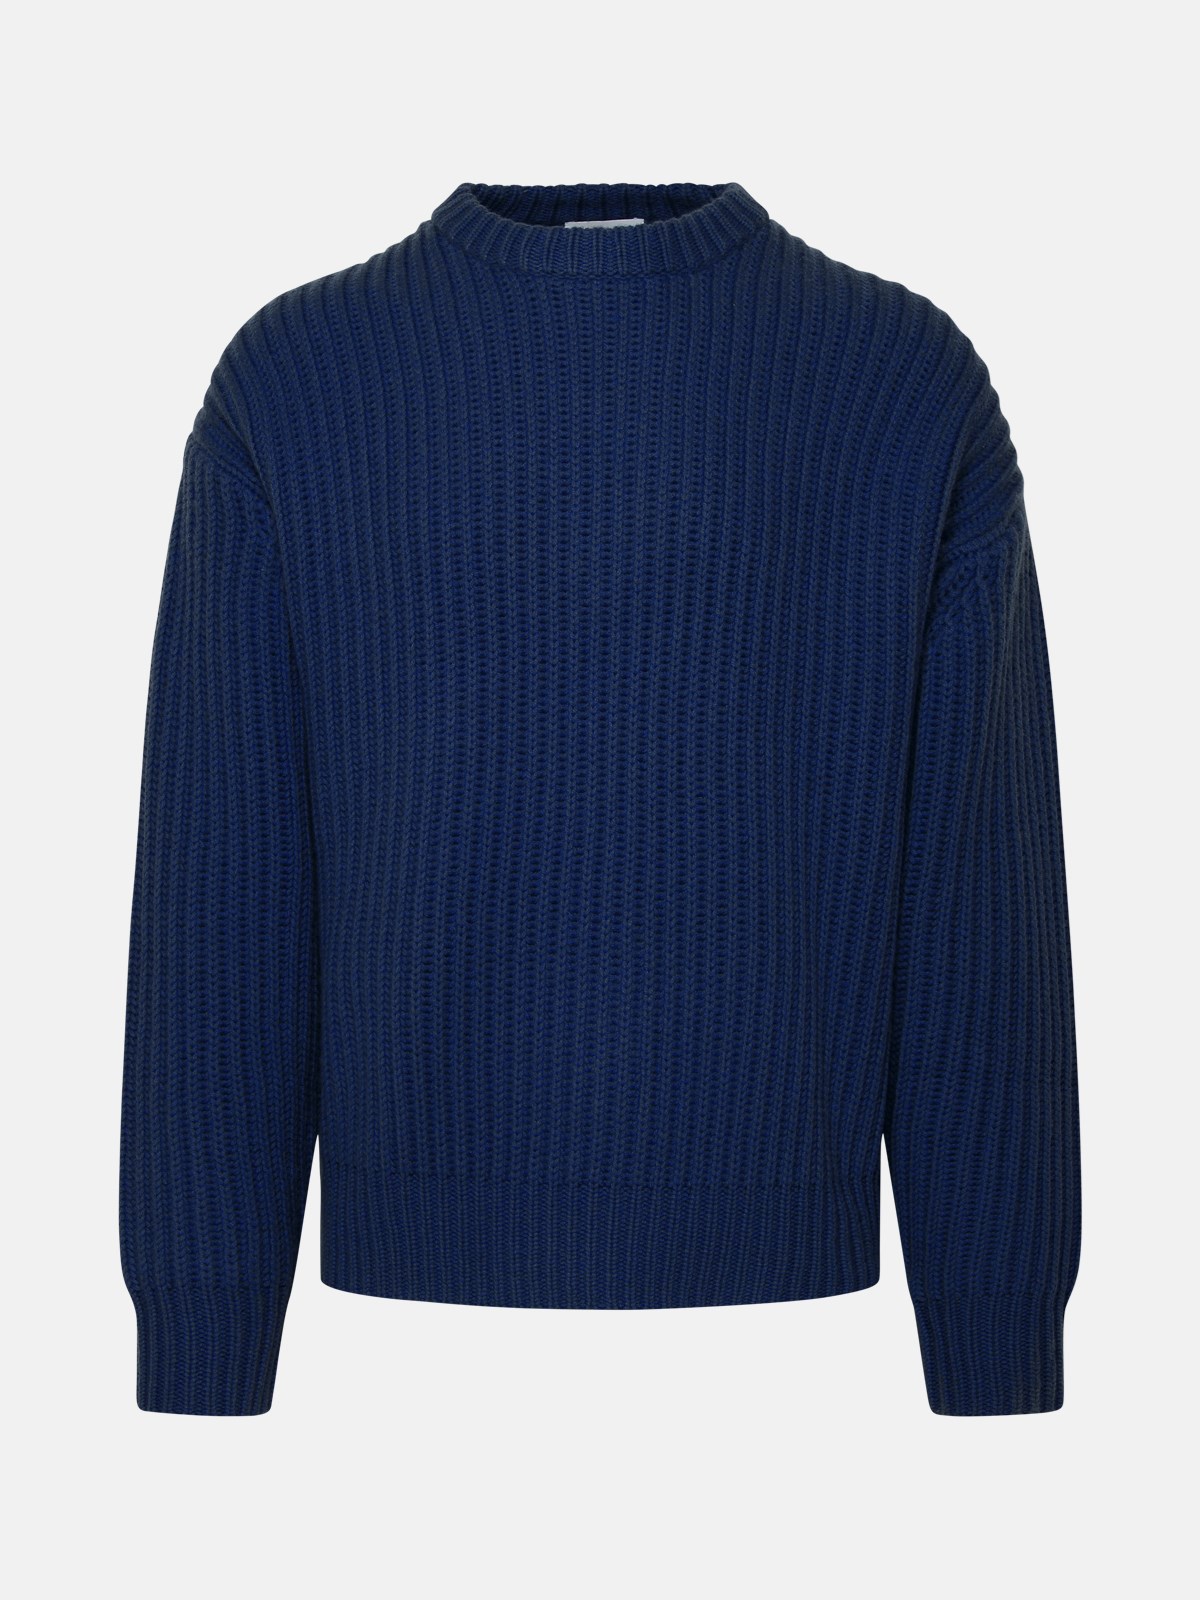 John Elliott Blue Cashmere Blend Sweater